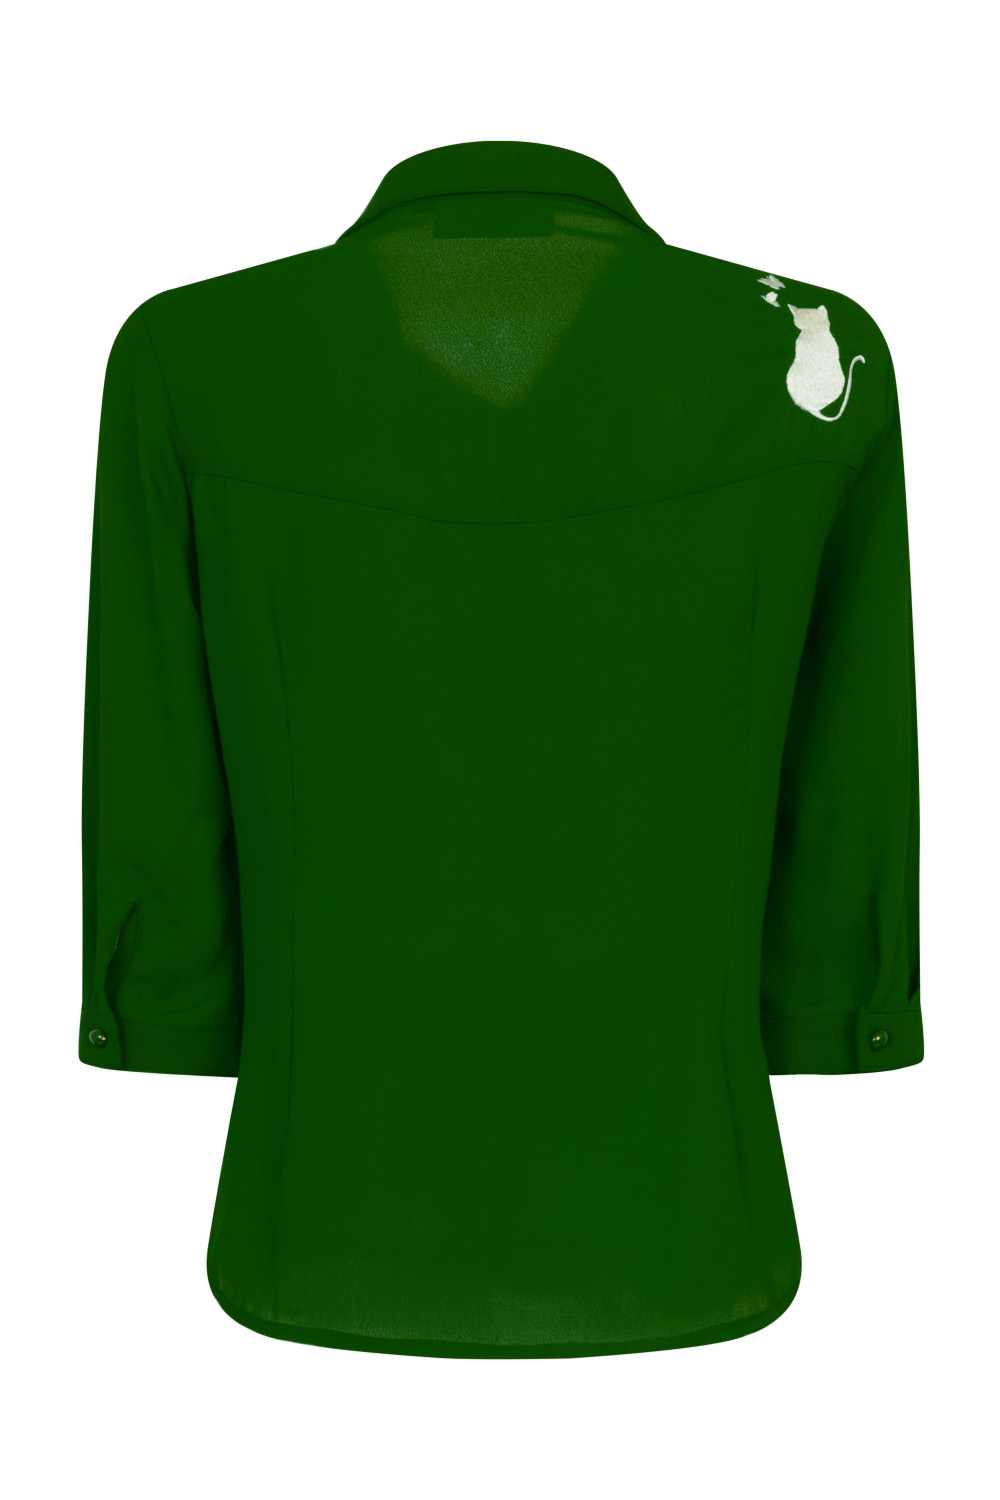 Banned Retro 60s Snowbird Blouse in Emerald